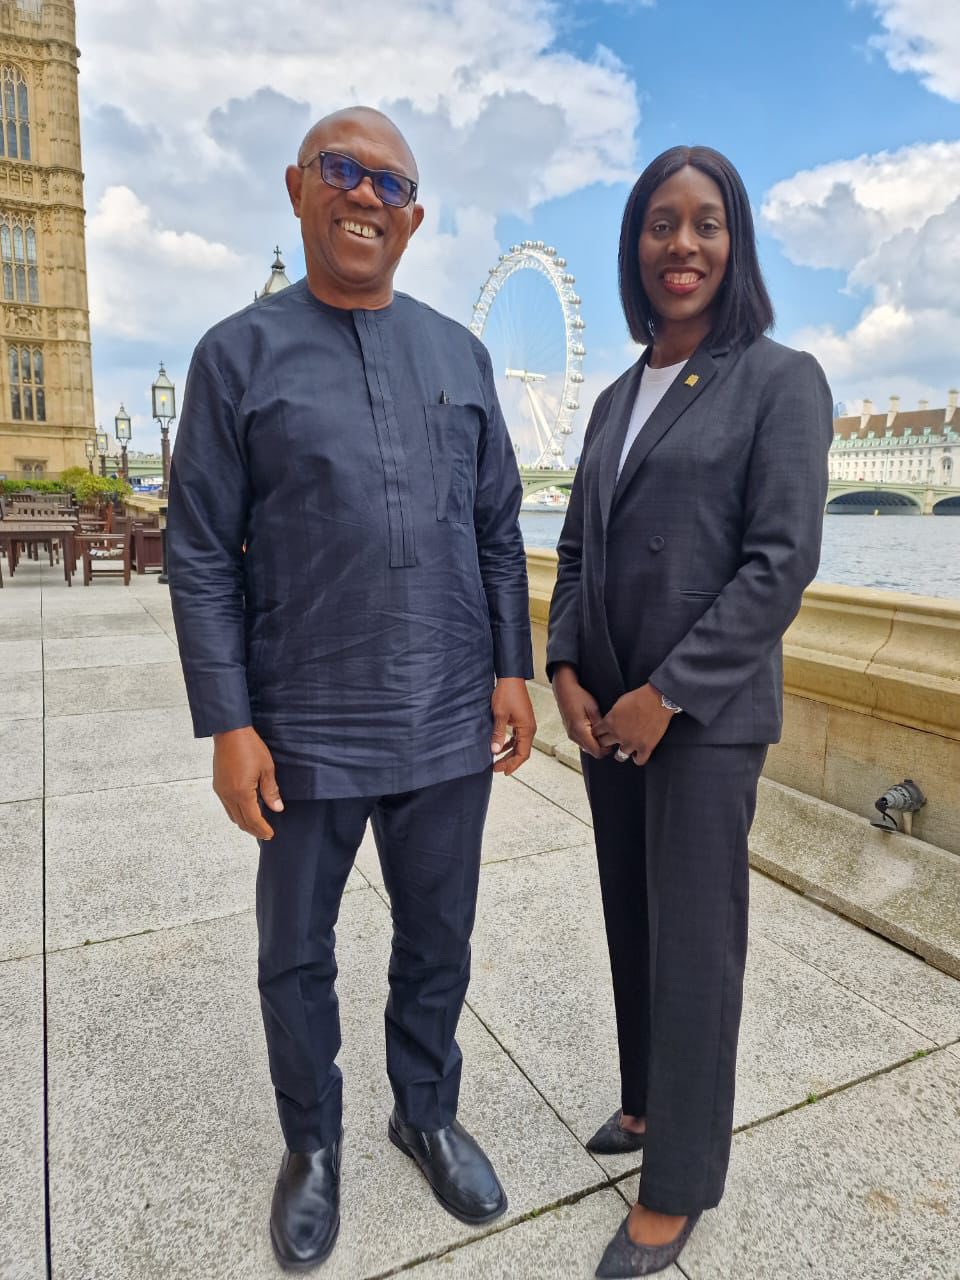 U.K. LP MP, Florence, encourages Obi on his vision for better Nigeria